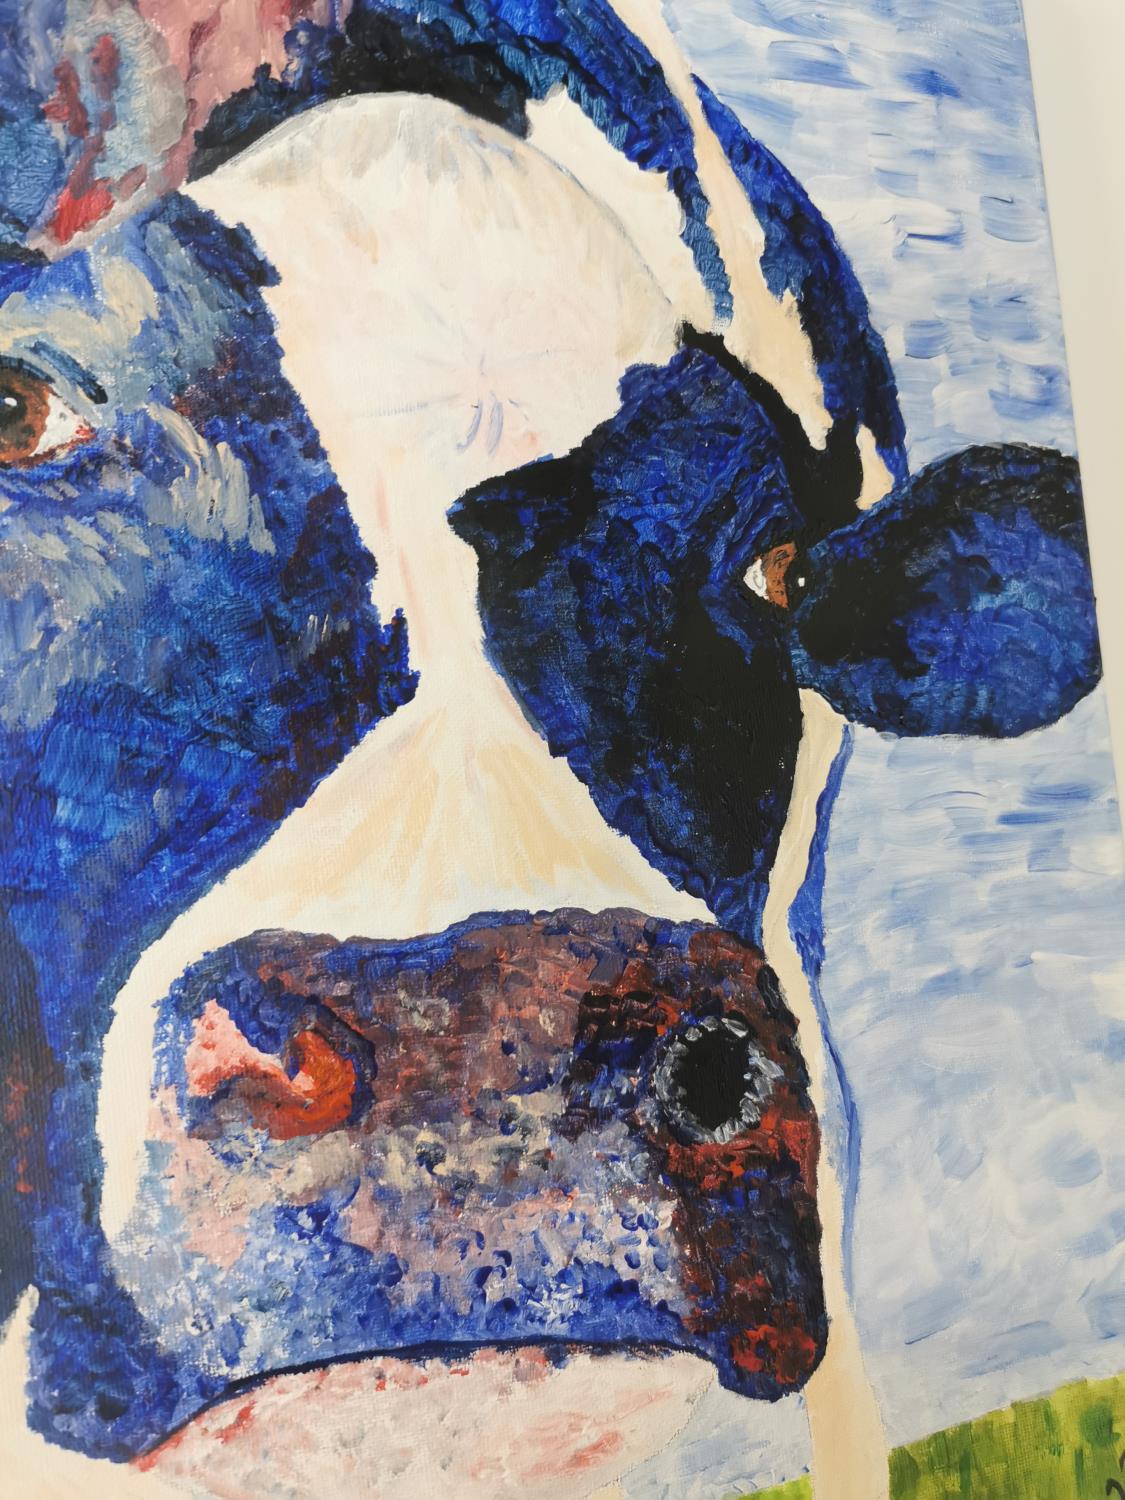 M Leddy Friesian Cow Oil on Canvas { 51cm H X 41cm W }. - Image 2 of 3